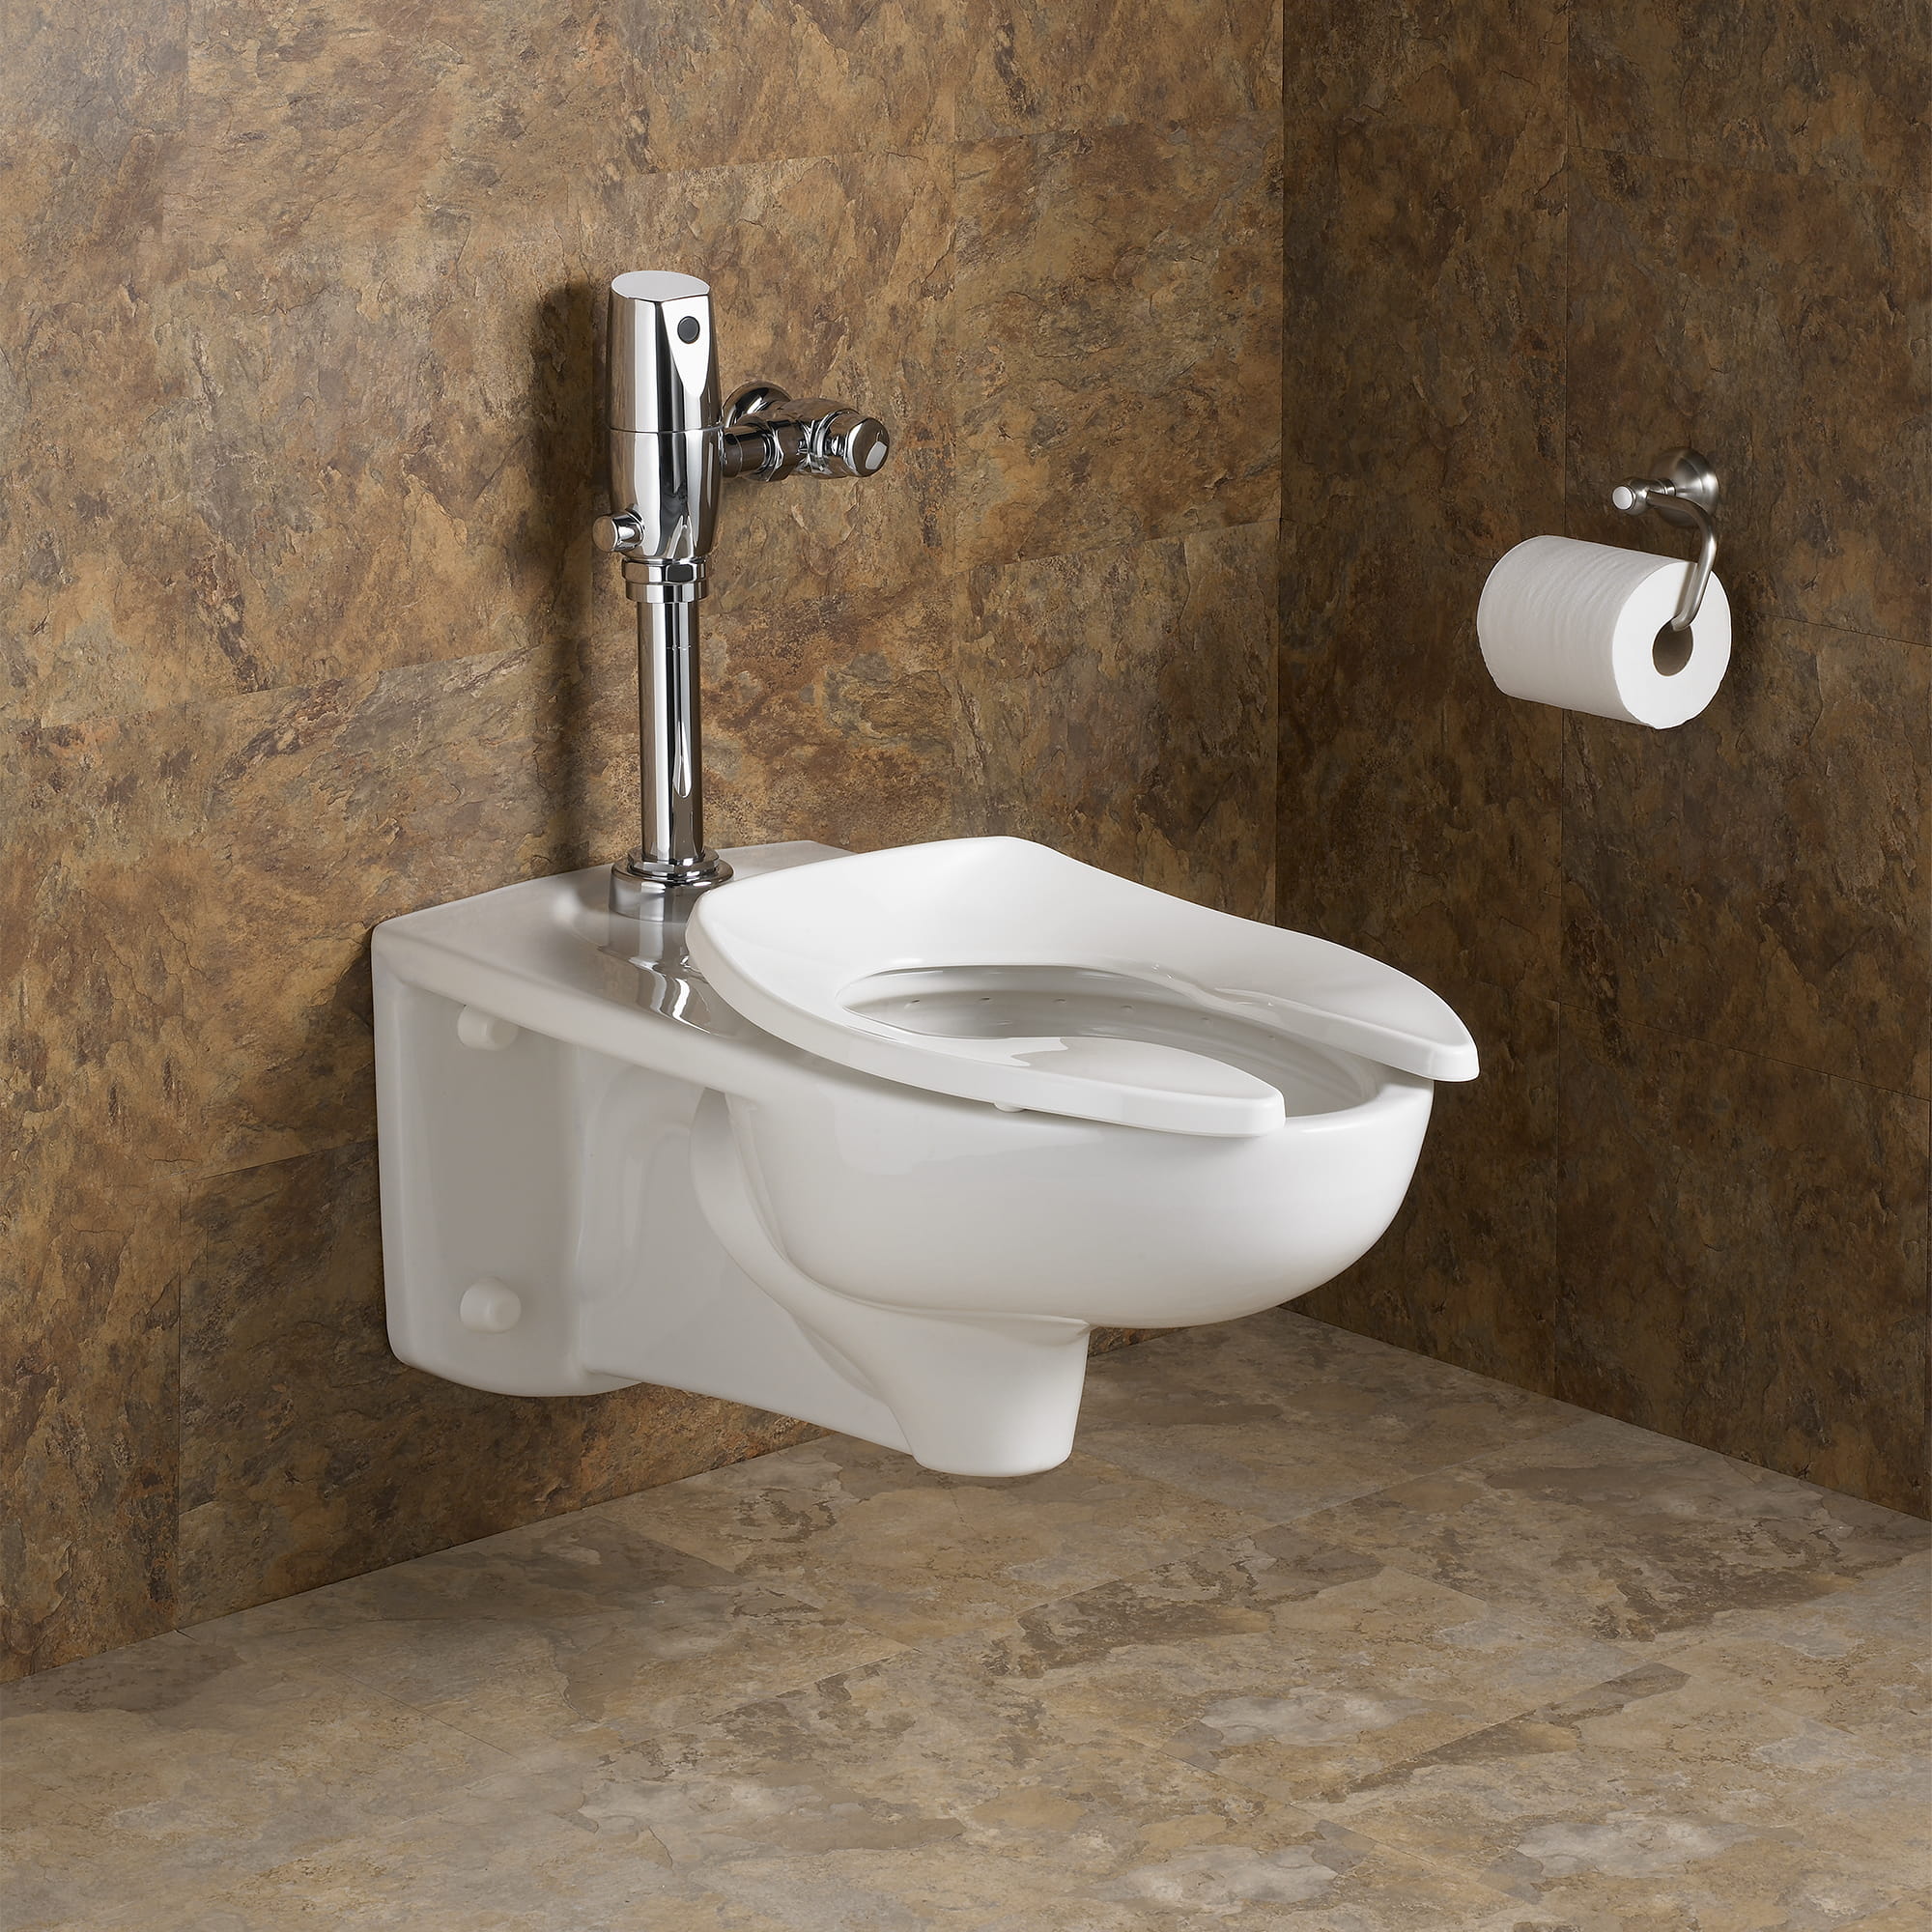 White American Standard 5901 Heavy-Duty Elongated Commercial Toilet Seat FS 